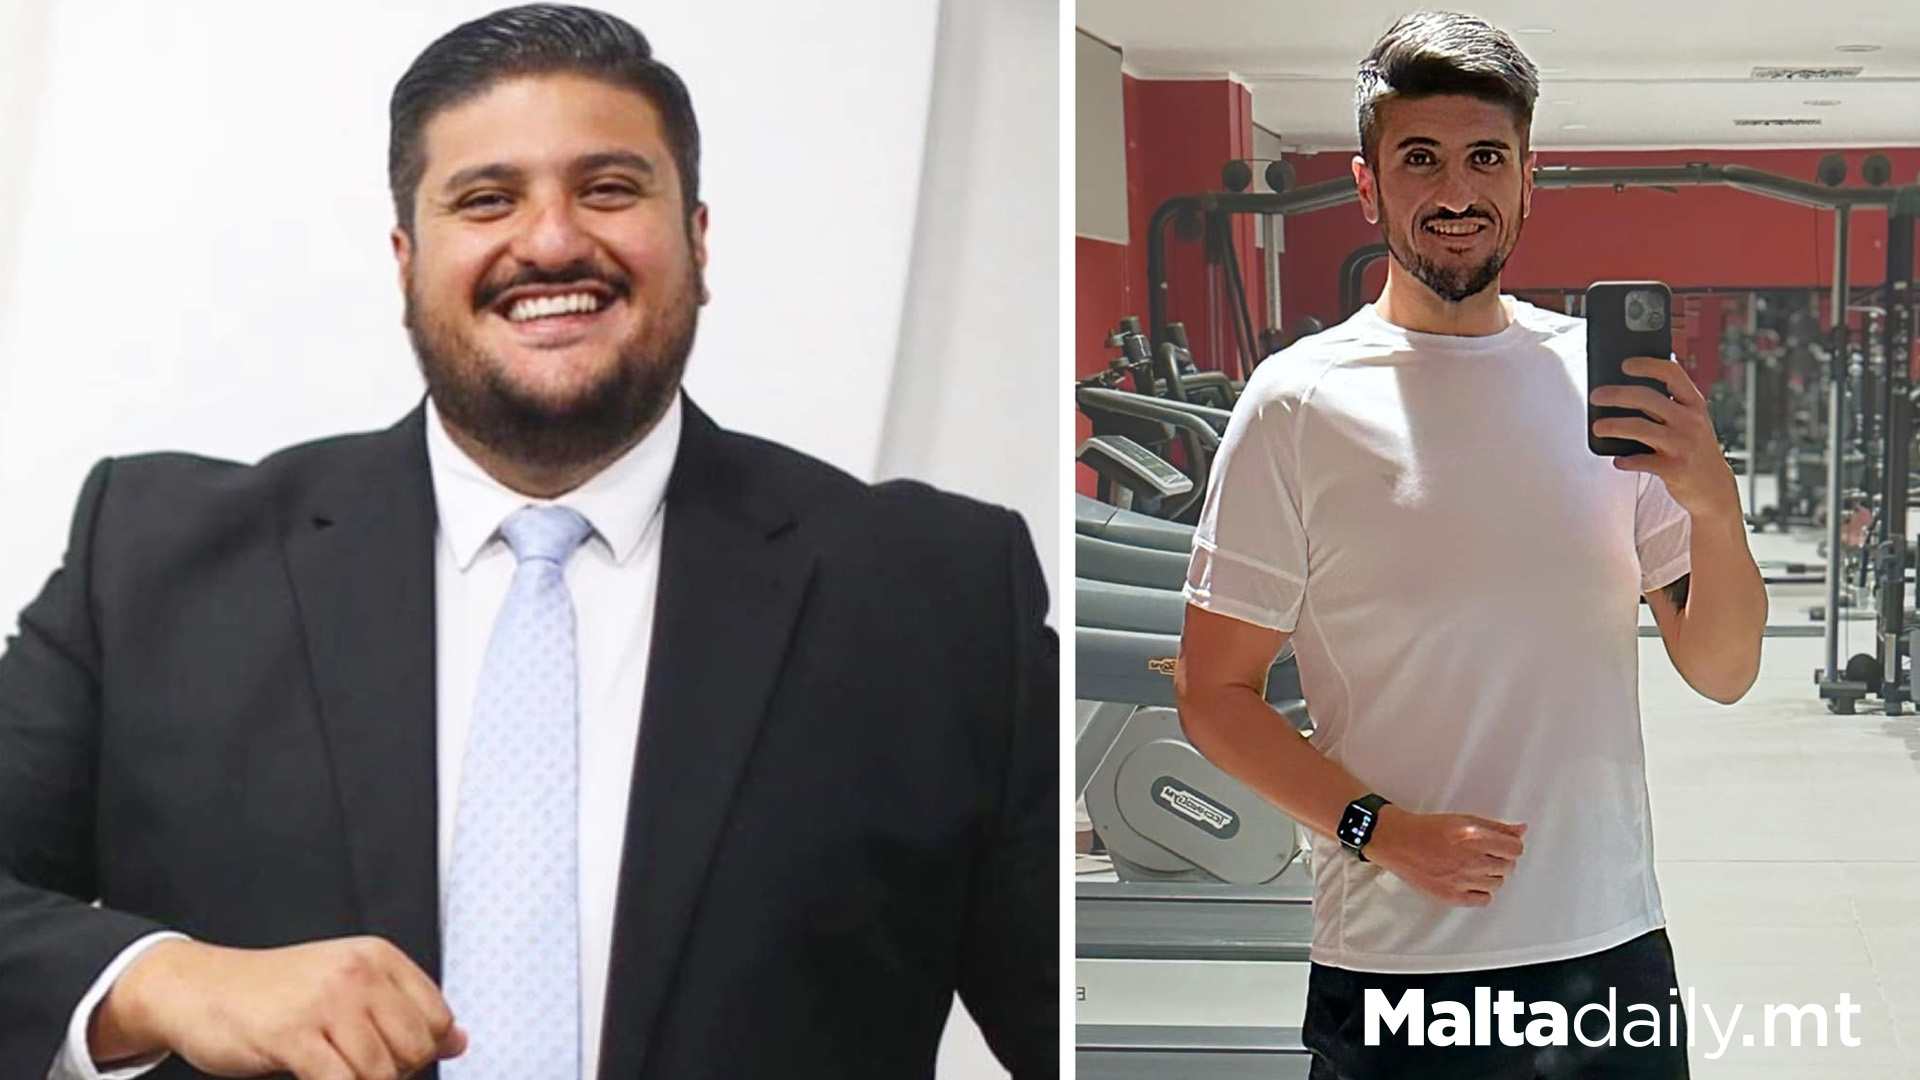 Luke Dalli Reflects On His Personal Weight Loss Journey